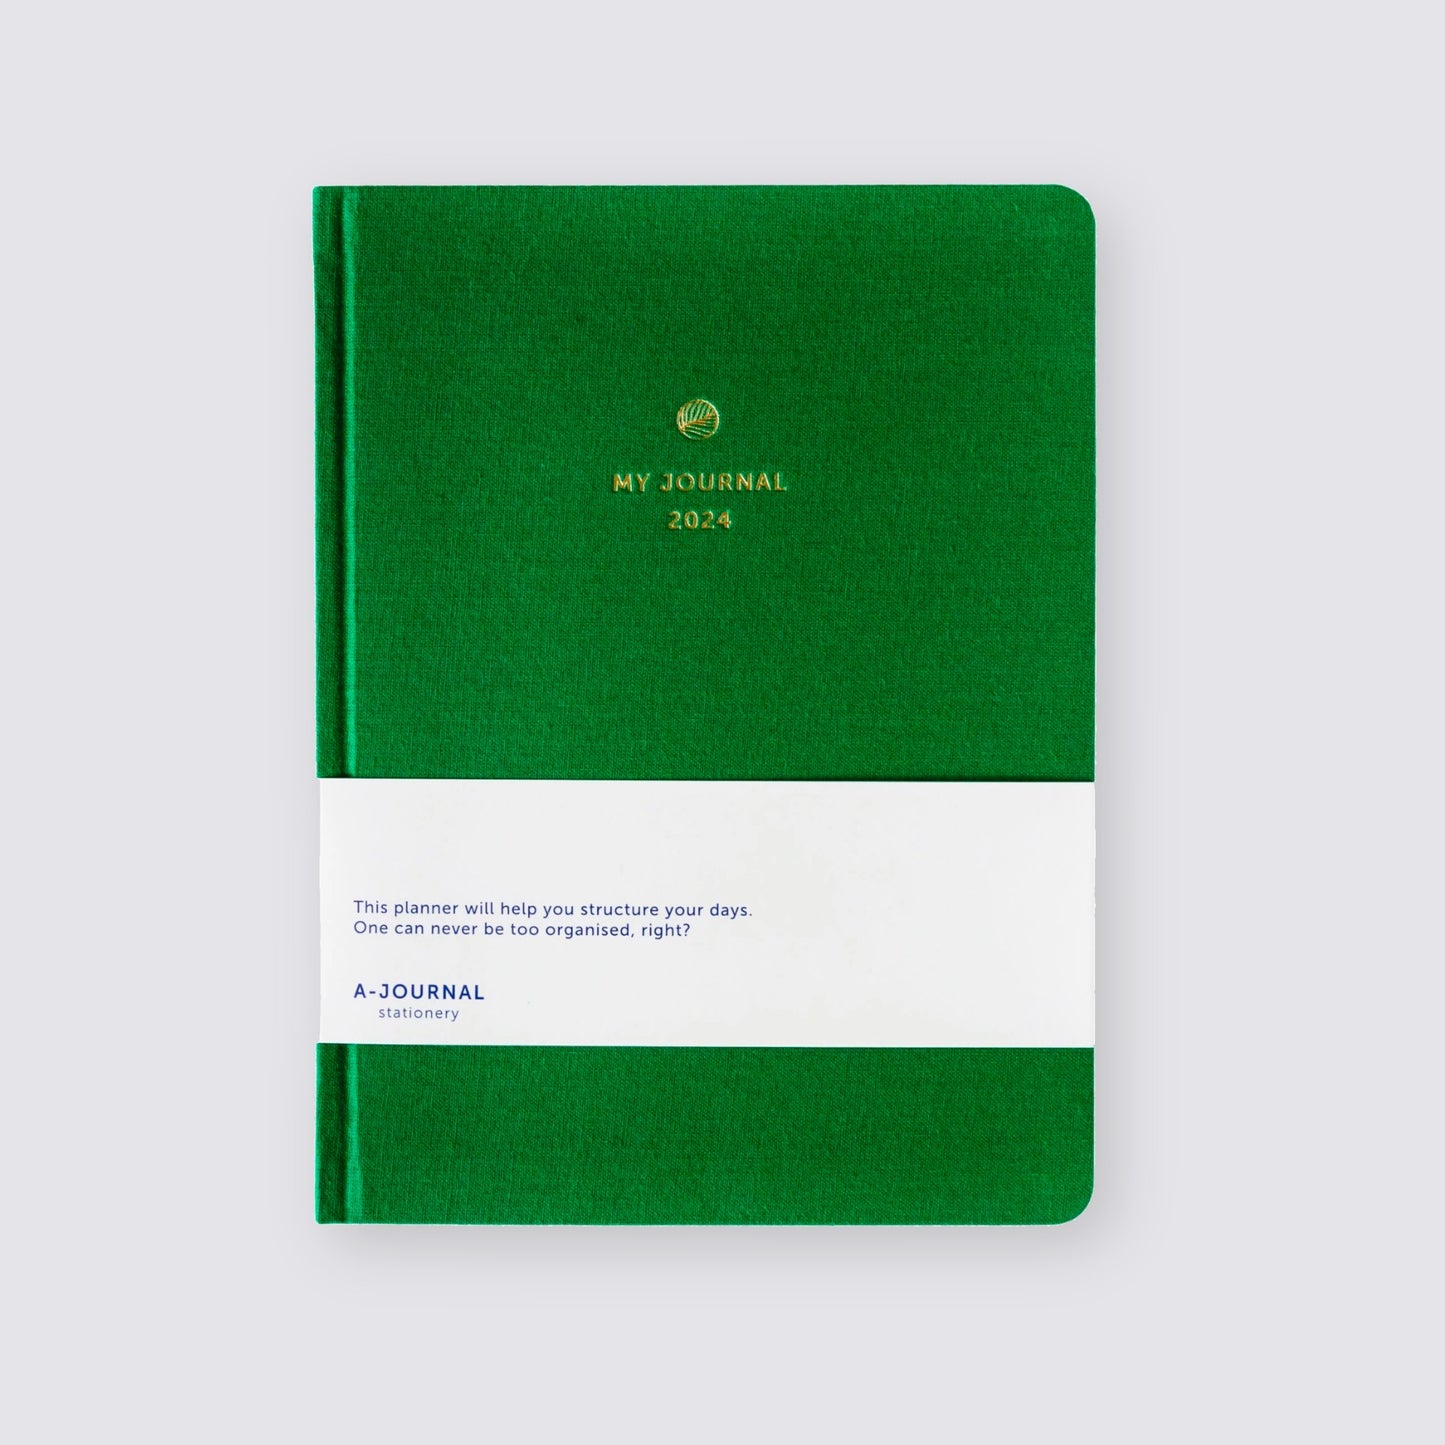 My Journal Diary 2024 - Dark Green Linen